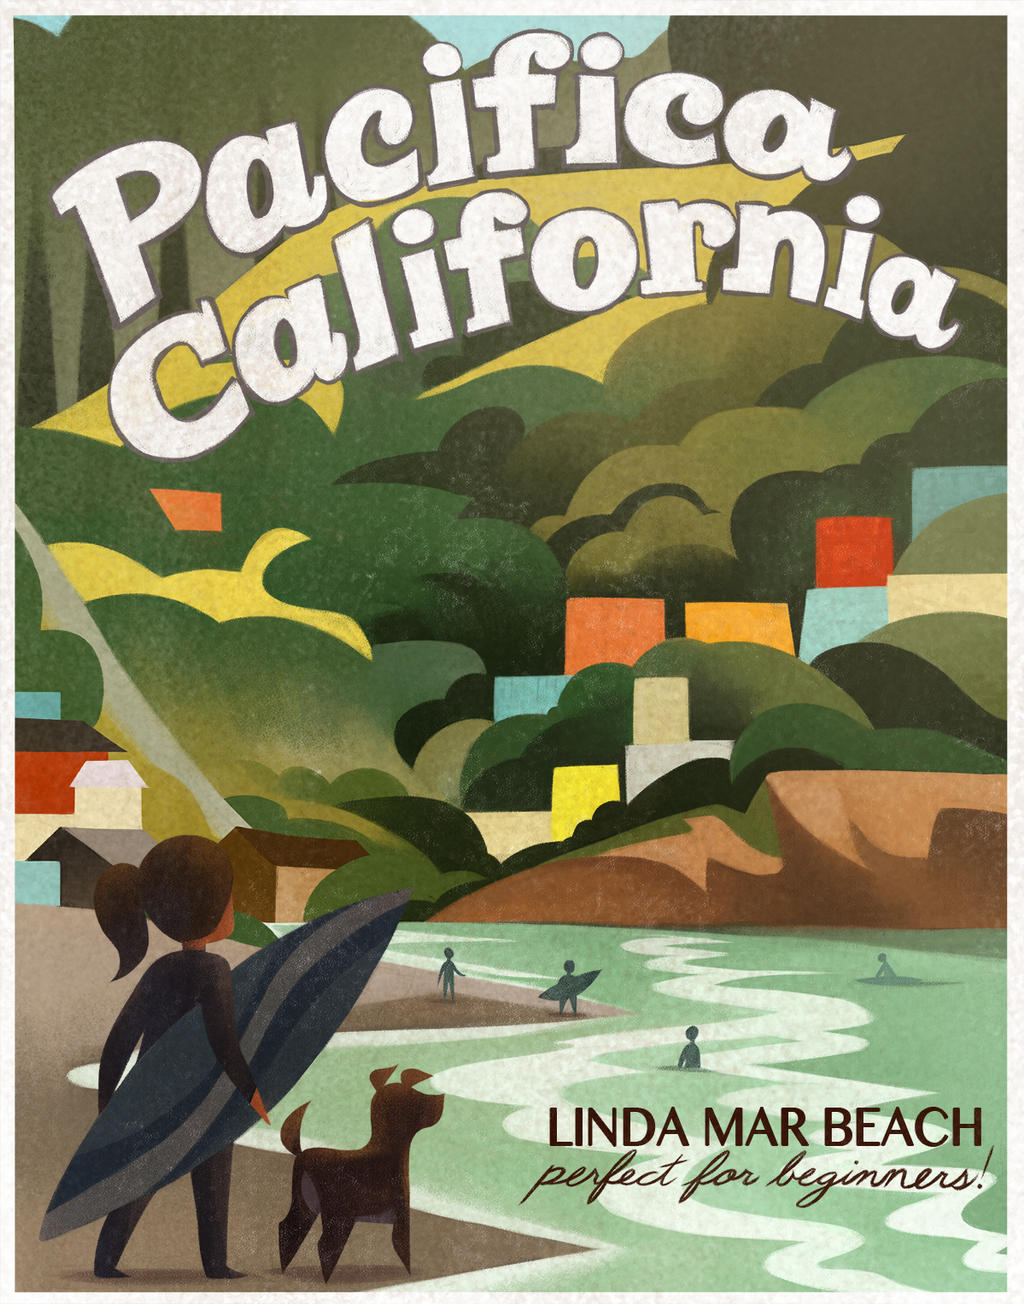 Pacifica, California, Linda Mar Beach illustration